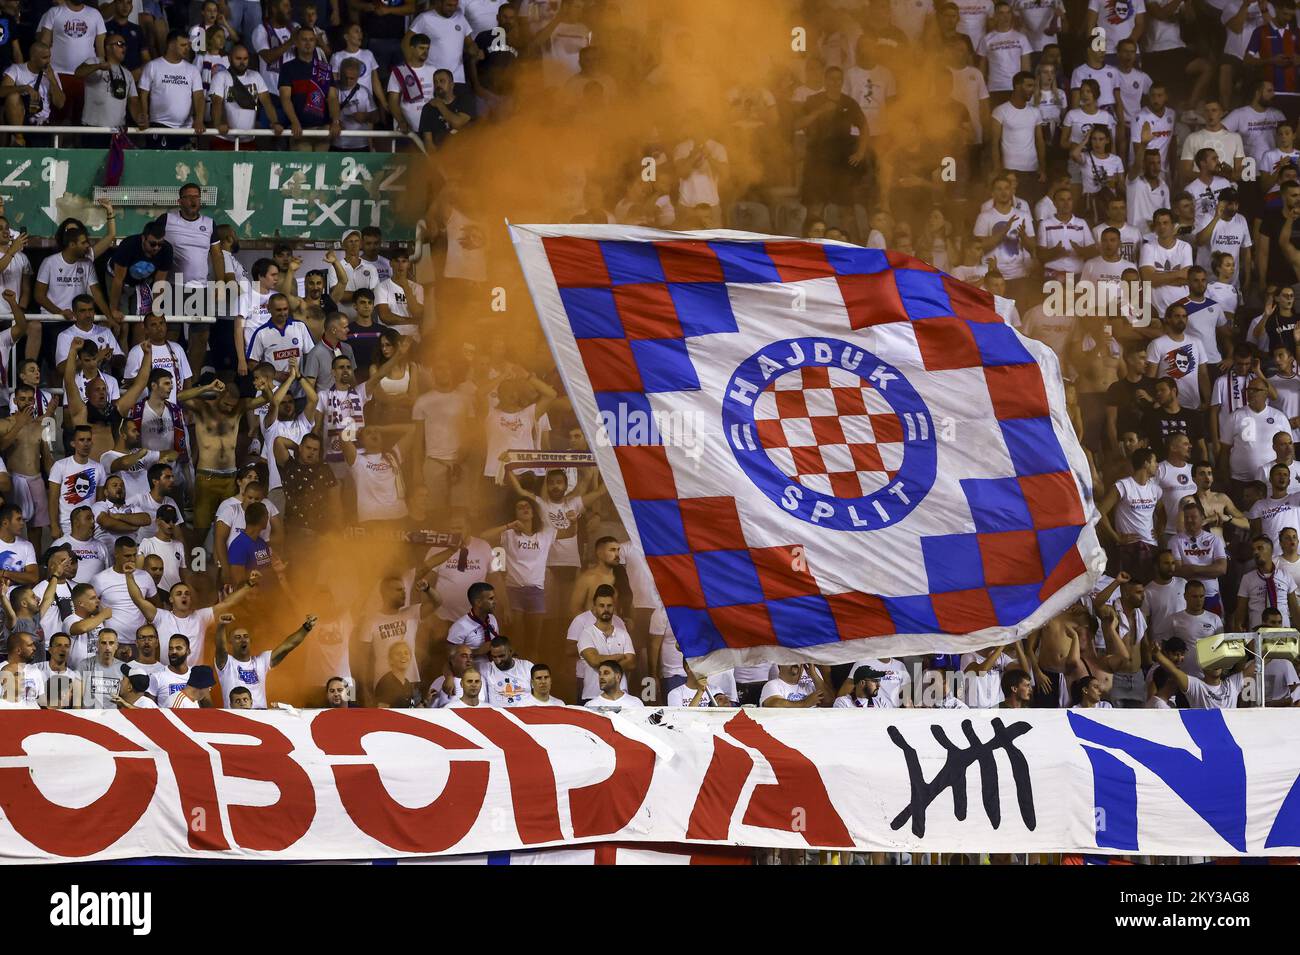 Hajduk fans set record in UEFA Europa Conference League qualifier